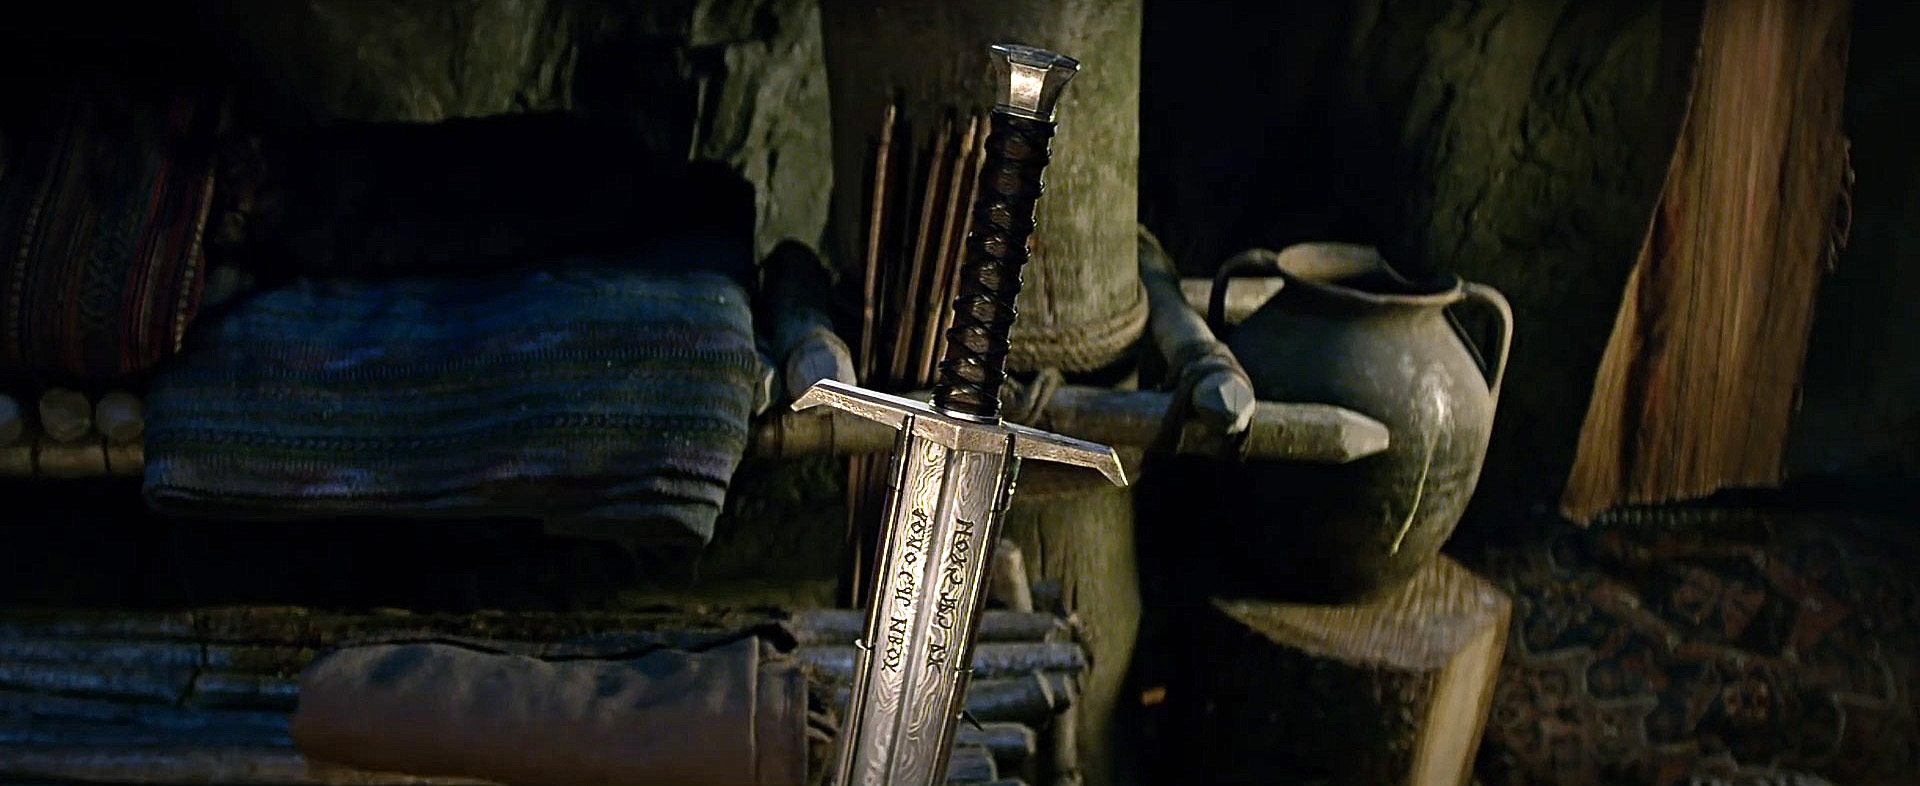 Меч короля артура гая ричи. Утер Пендрагон меч короля Артура.